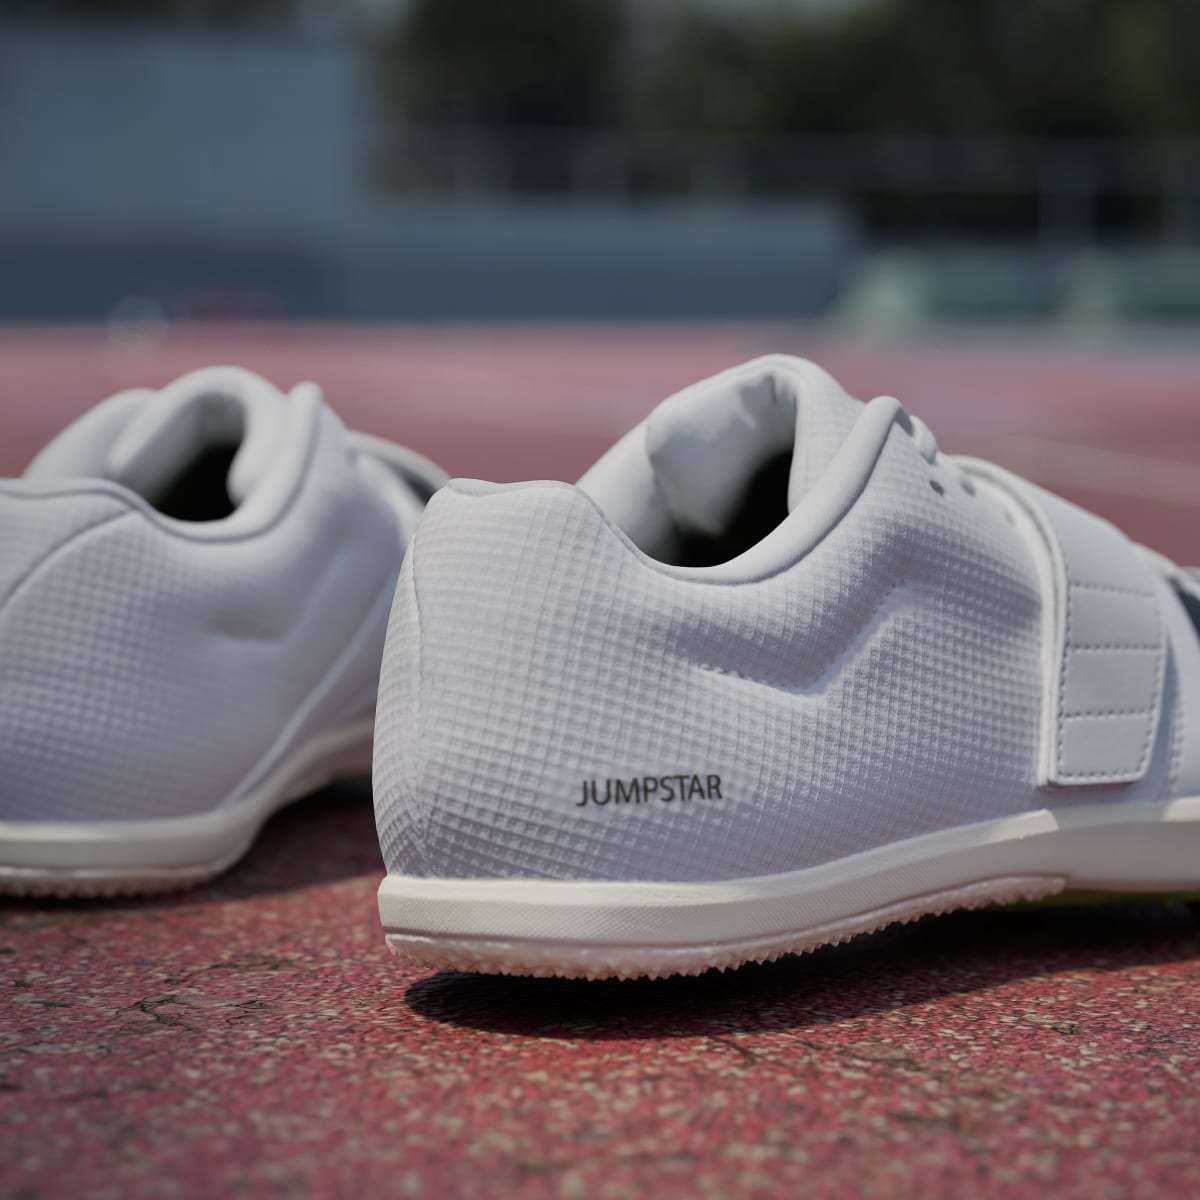 Adidas Scarpe da atletica Jumpstar. 9